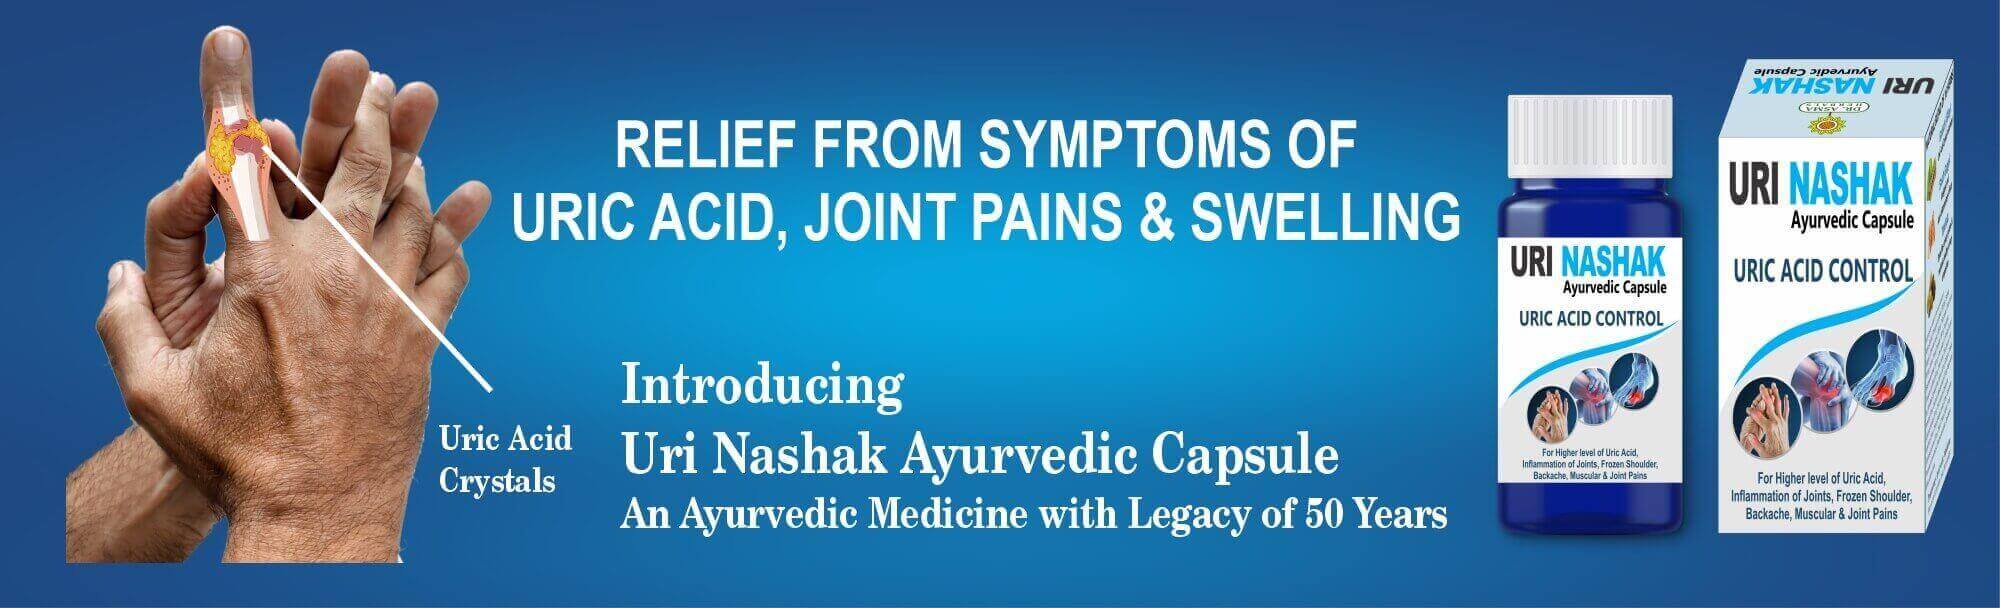 uri nashak ayurvedic capsule for uric acid banner 1 xd